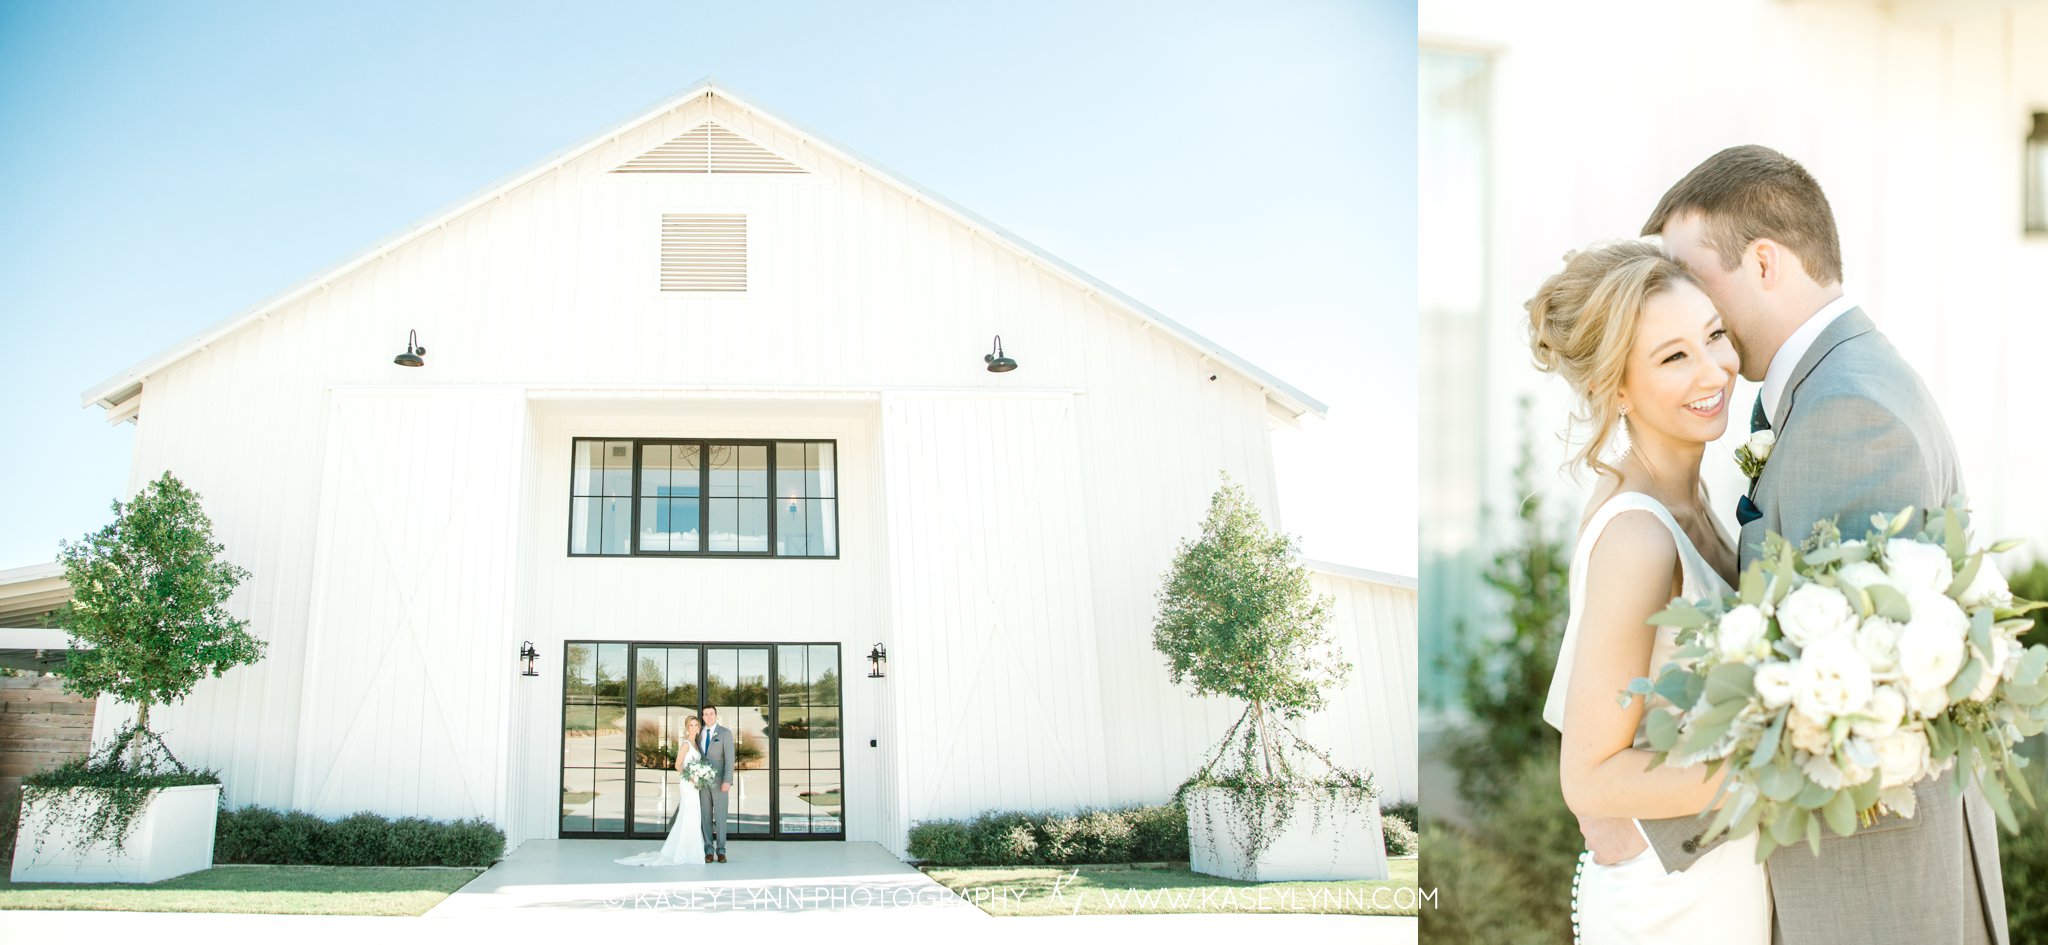 The Farmhouse Wedding Venue / Kasey Lynn Photography